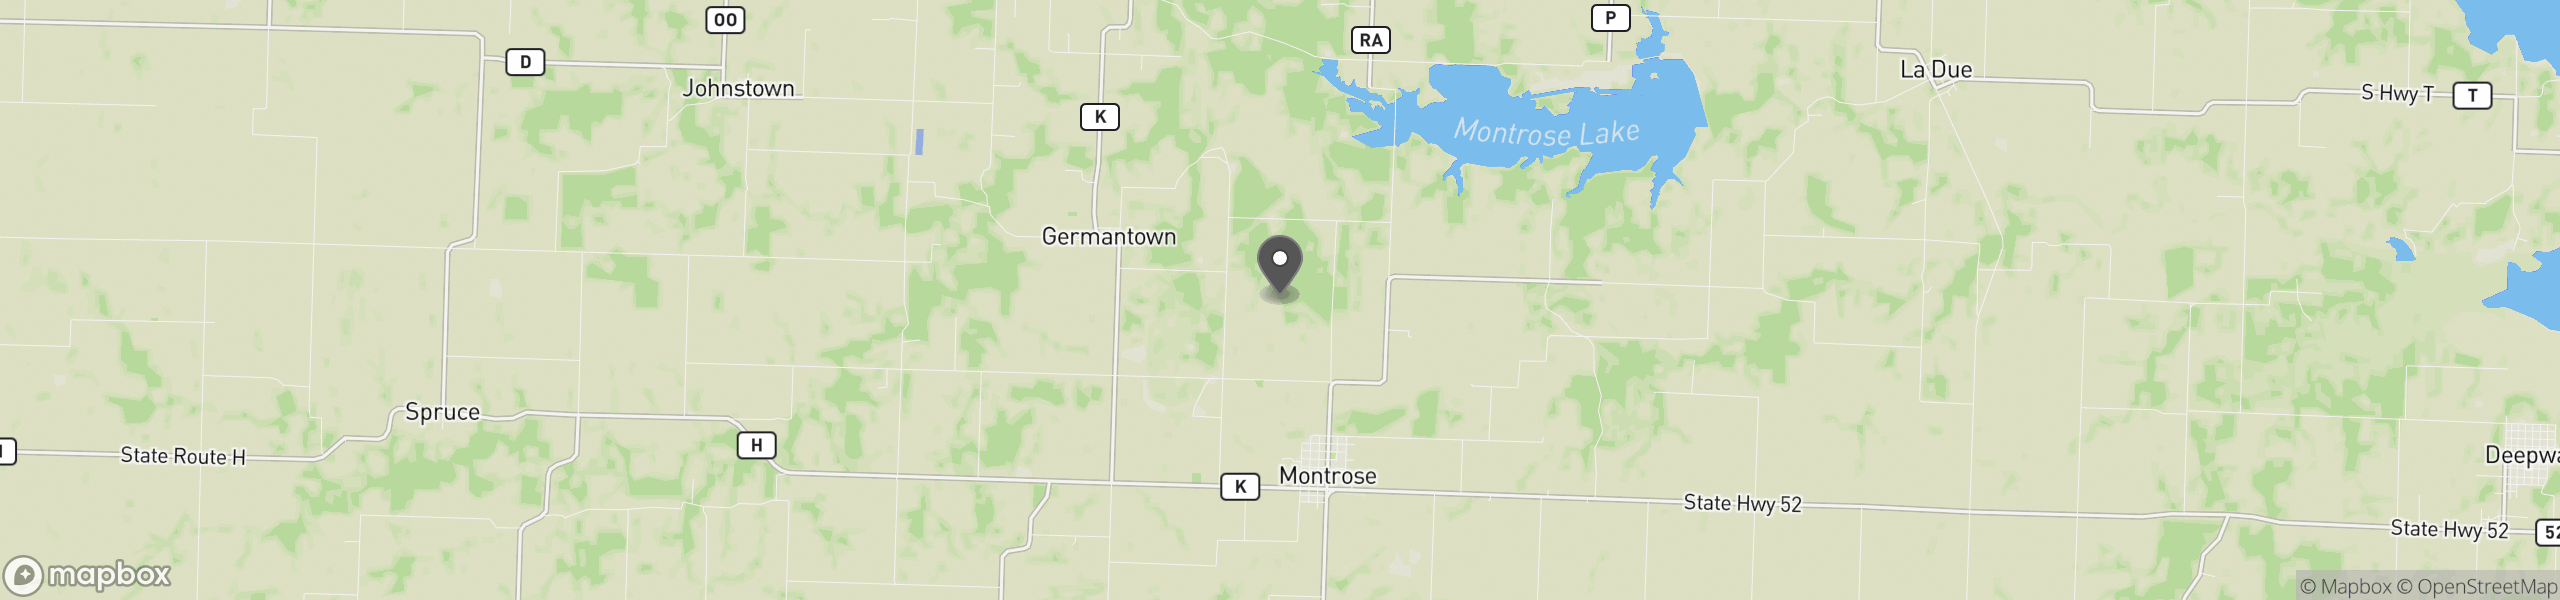 Montrose, MO 64770